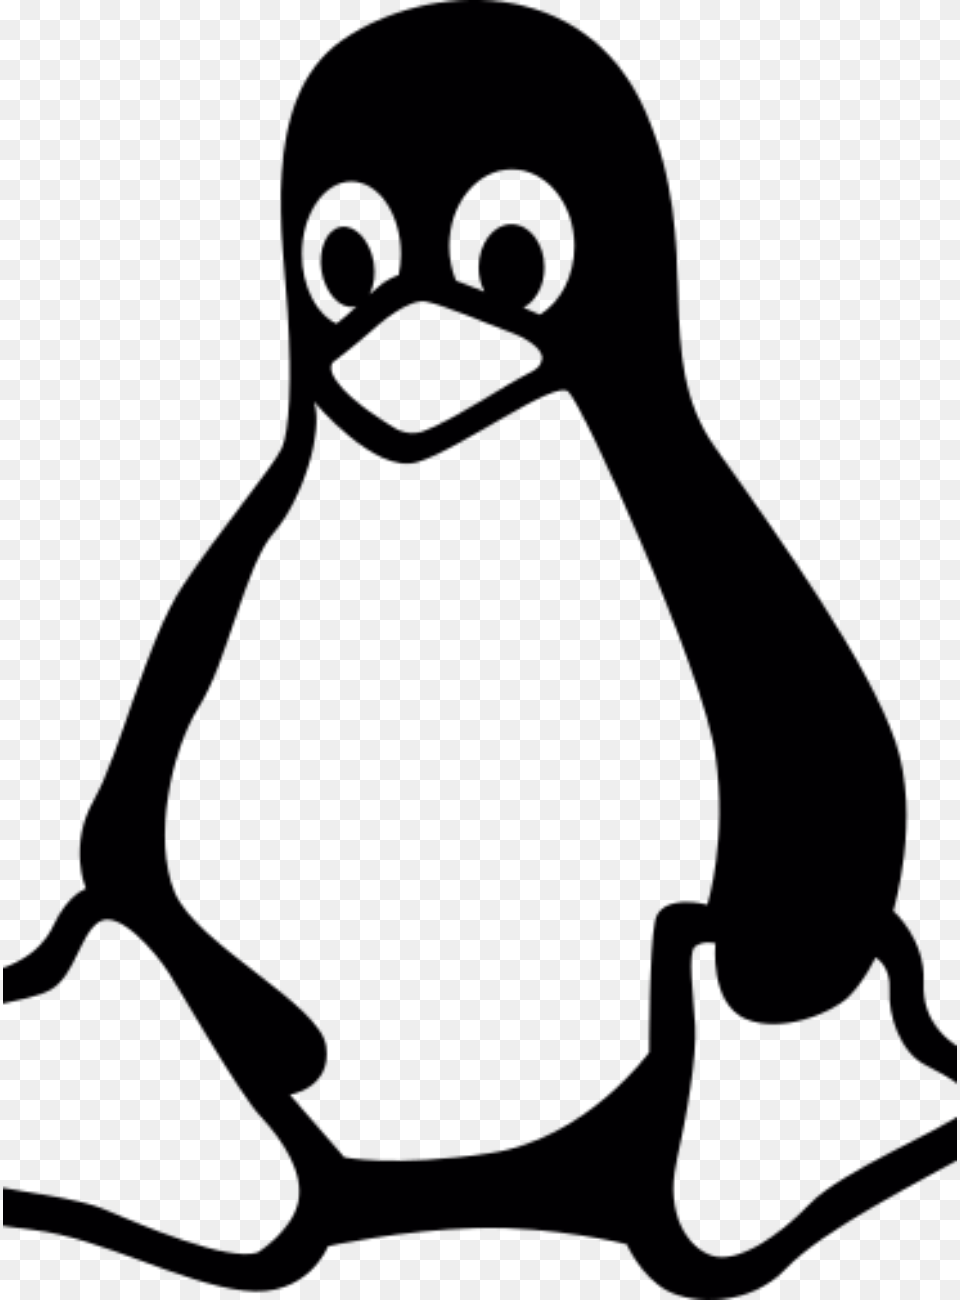 Linux Logo White Png Image